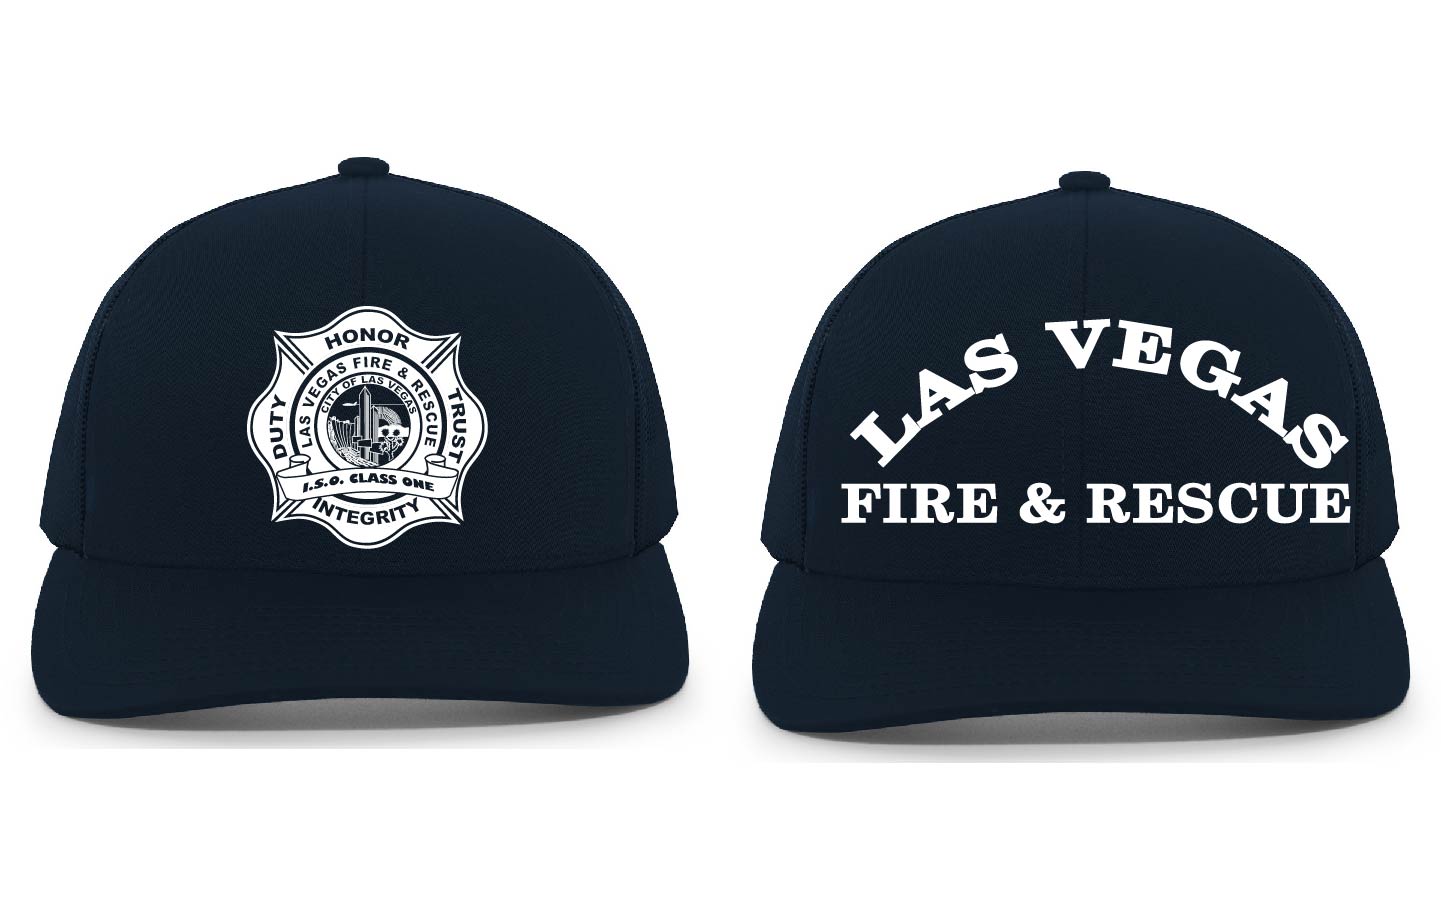 LVFR (Las Vegas Fire & Rescue) Flexfit Delta Duty Hat